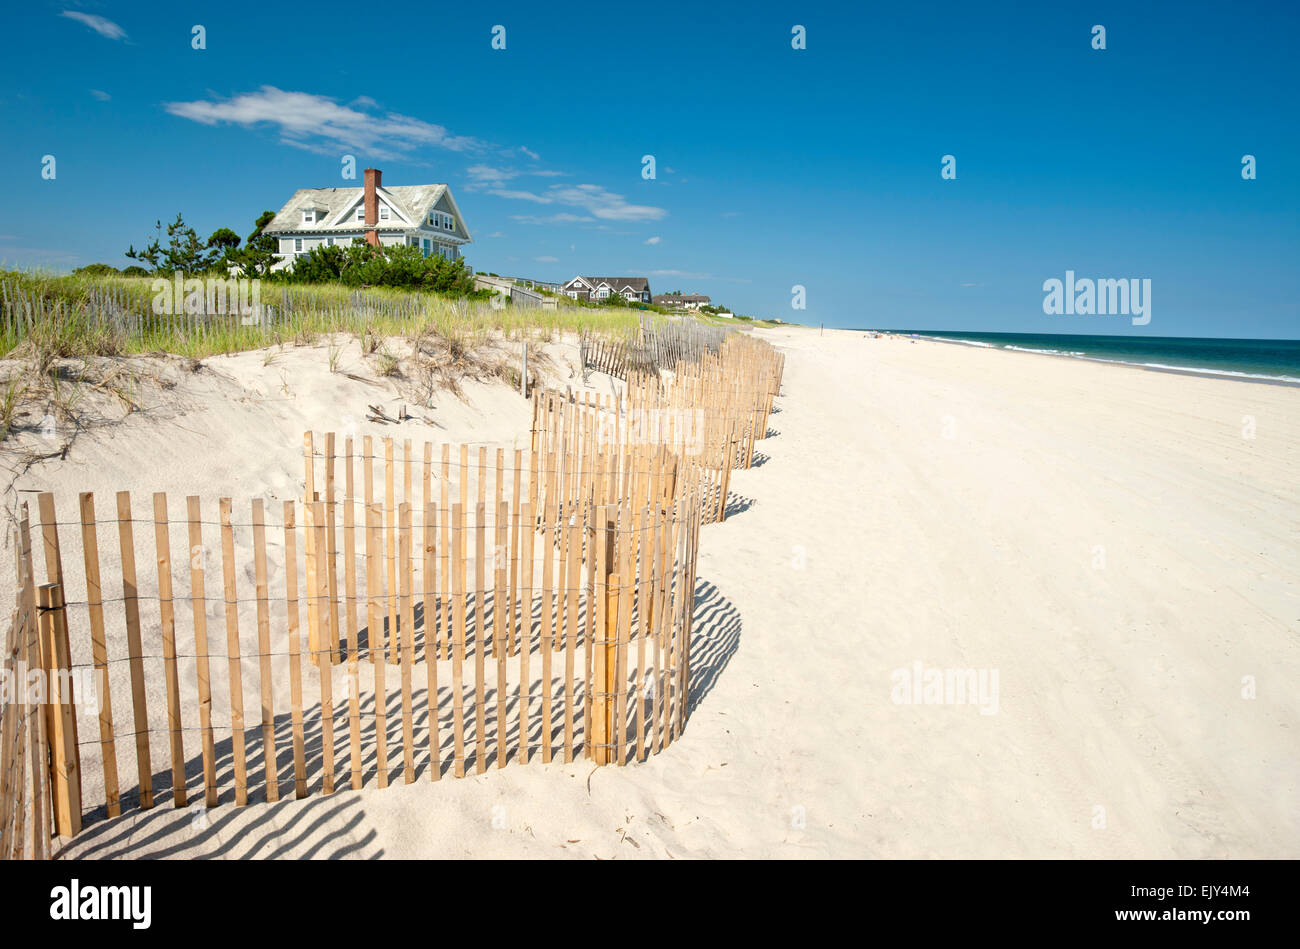 SPIAGGIA CASA DUNE ATLANTIC BEACH AMAGANSETT SUFFOLK COUNTY LONG ISLAND NEW YORK STATE USA Foto Stock